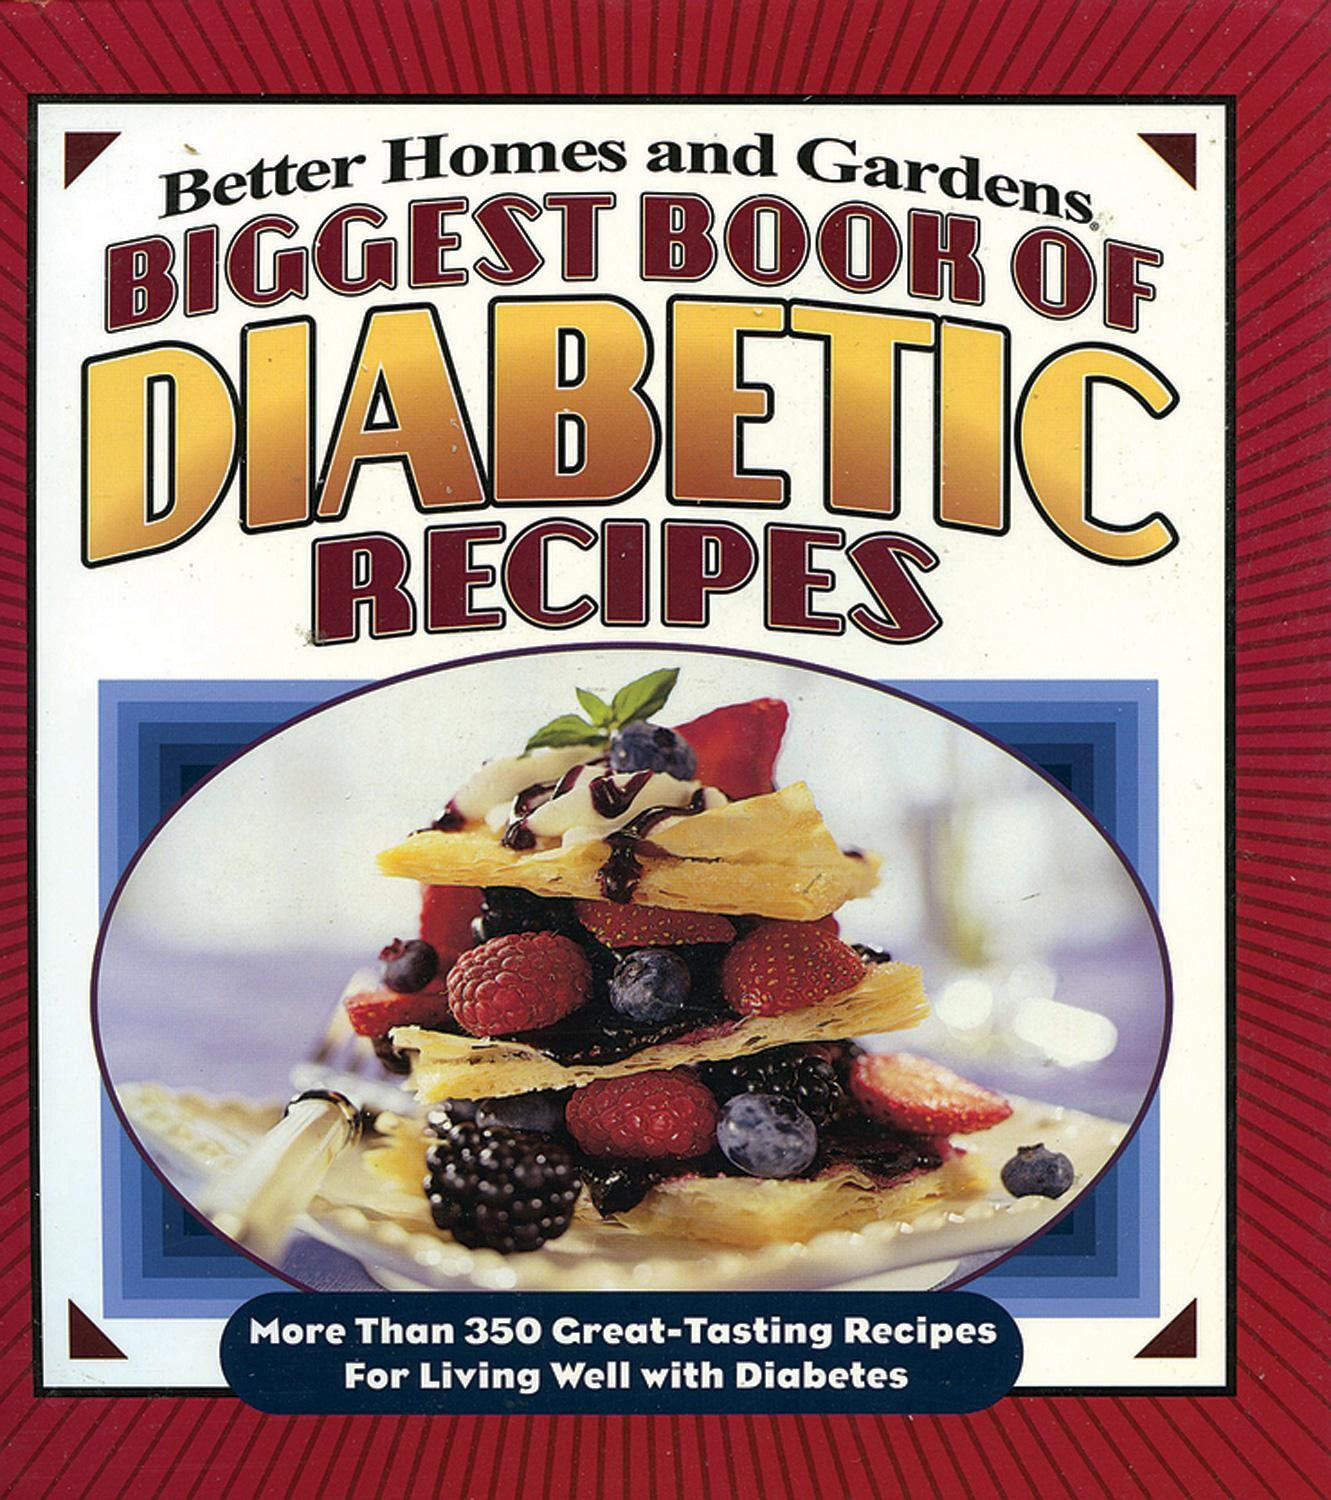 Diabetic Living Recipes
 Biggest Book of Diabetic Recipes More Than 350 Great